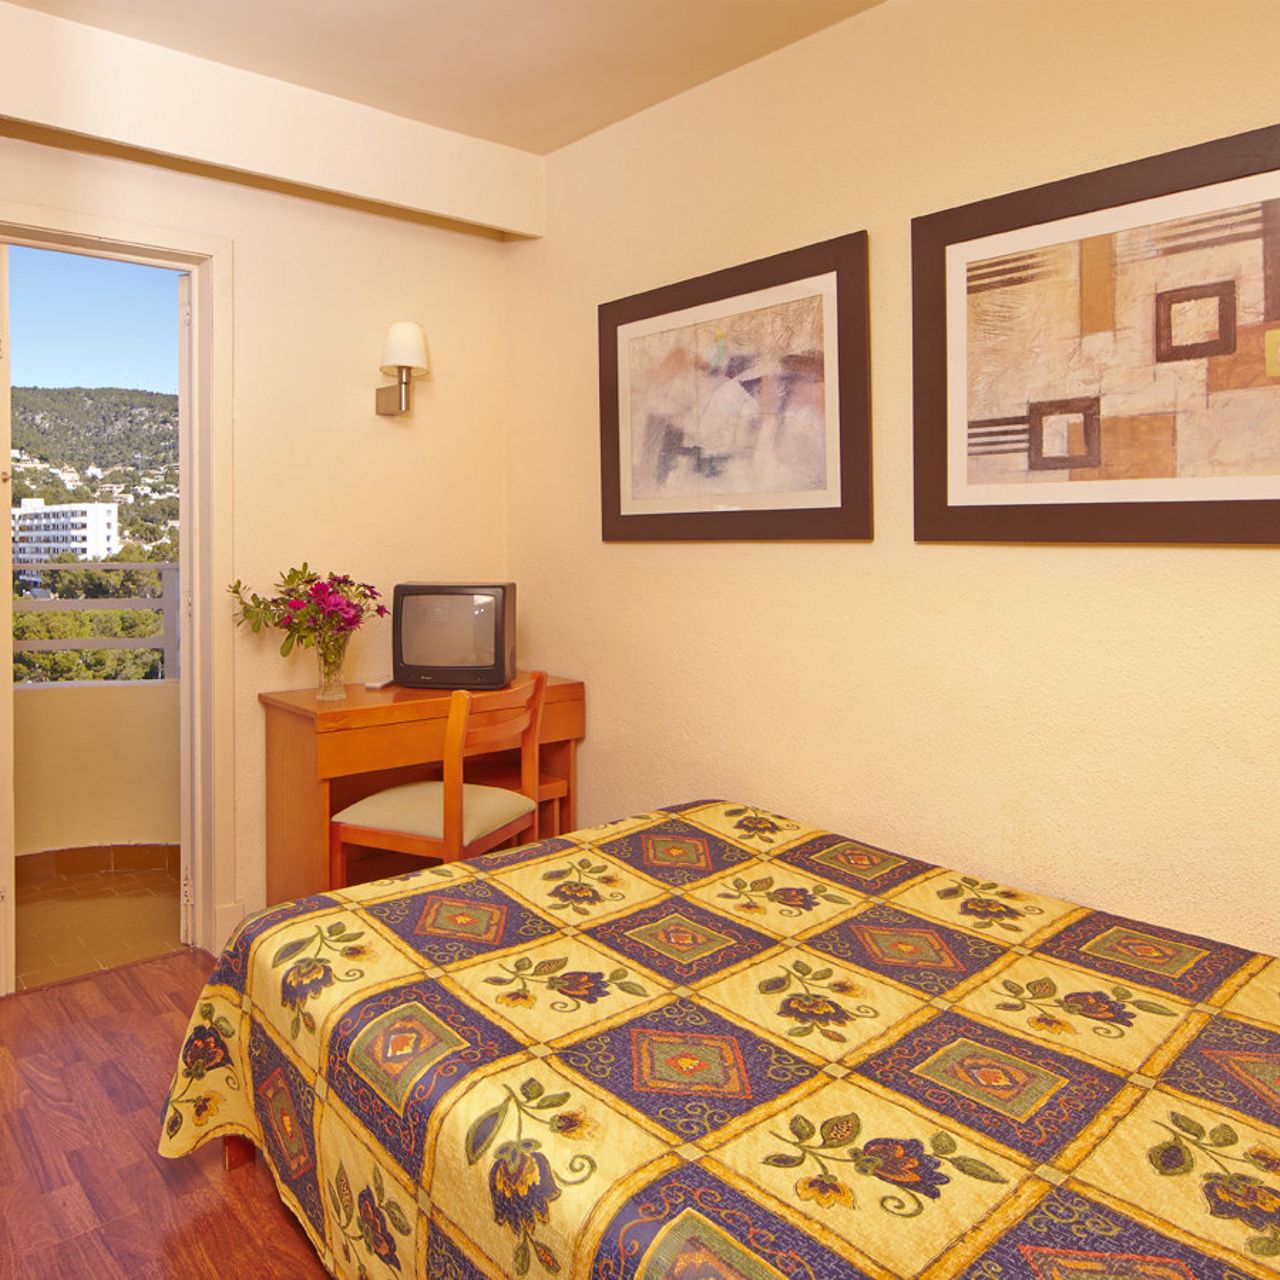 Hotel MLL Blue Bay - Palma de Majorque - HOTEL INFO